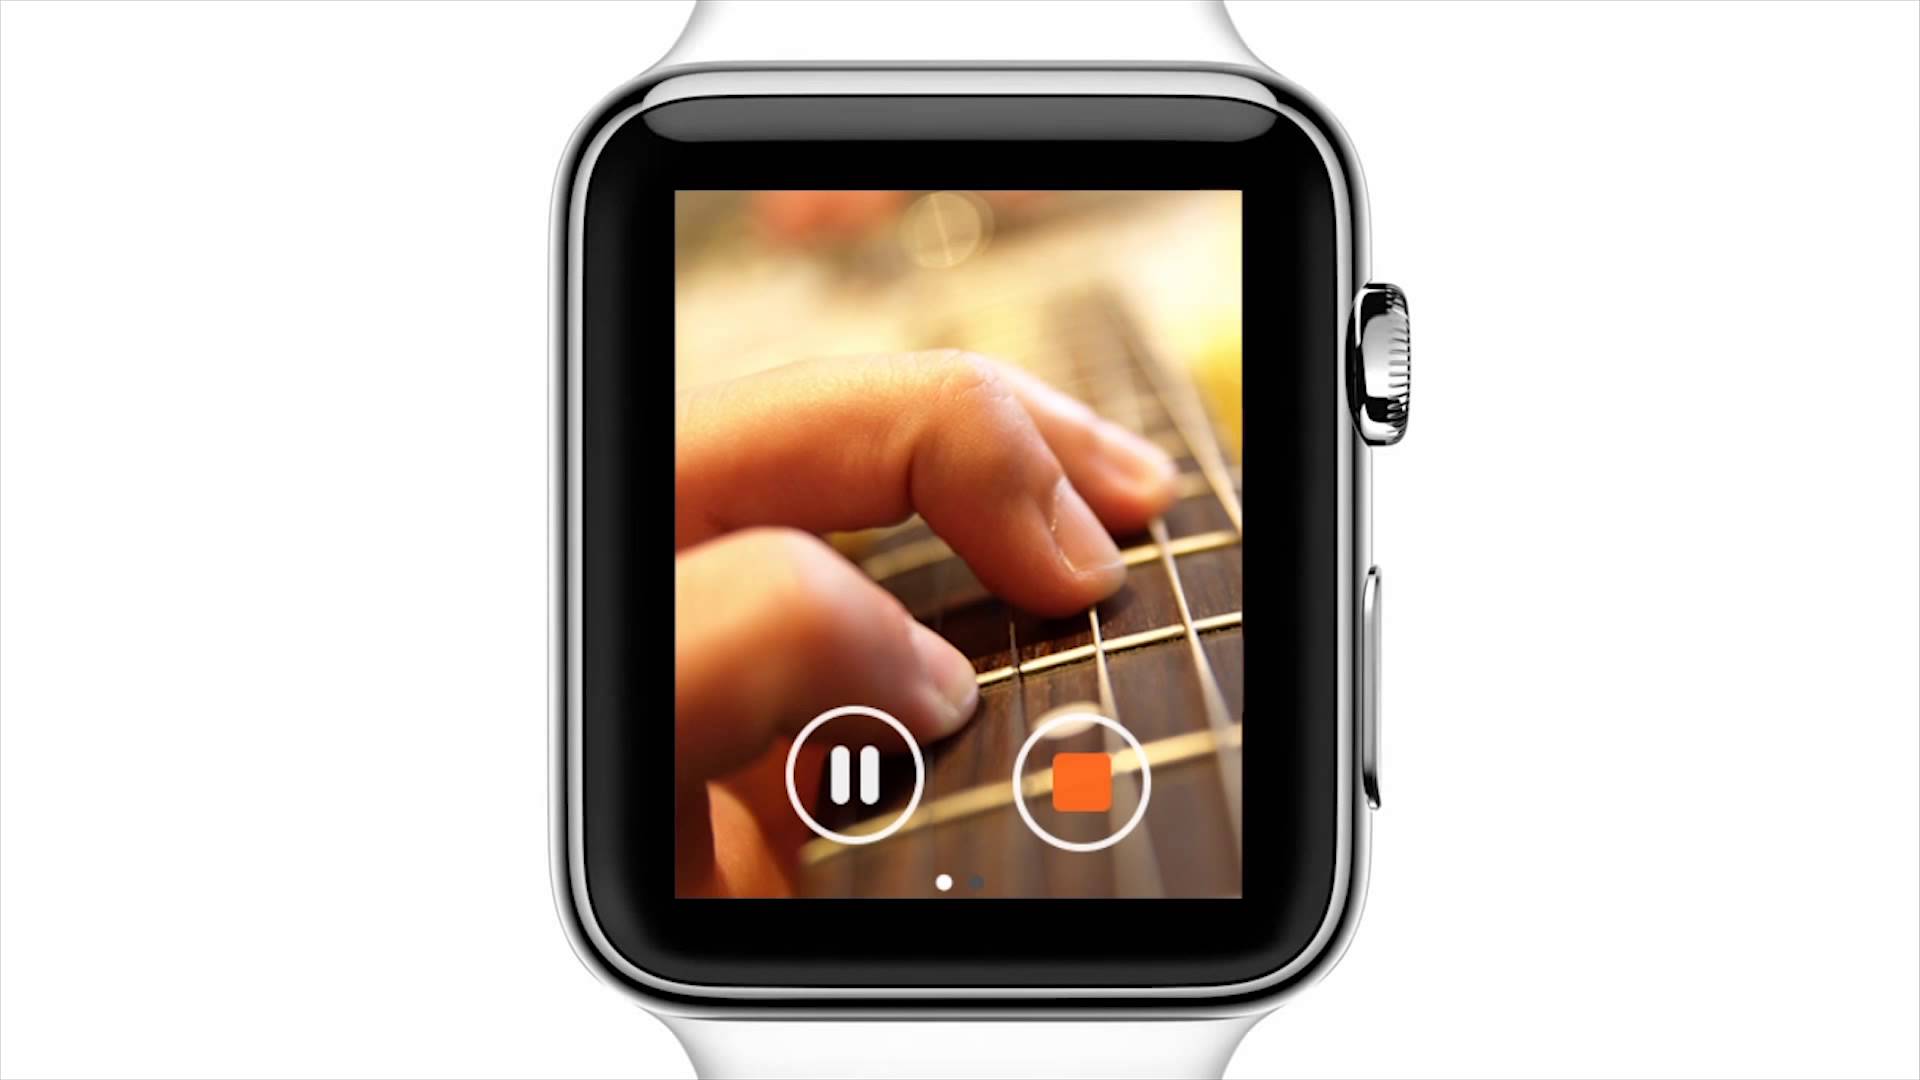 Best Apps For Apple Watch